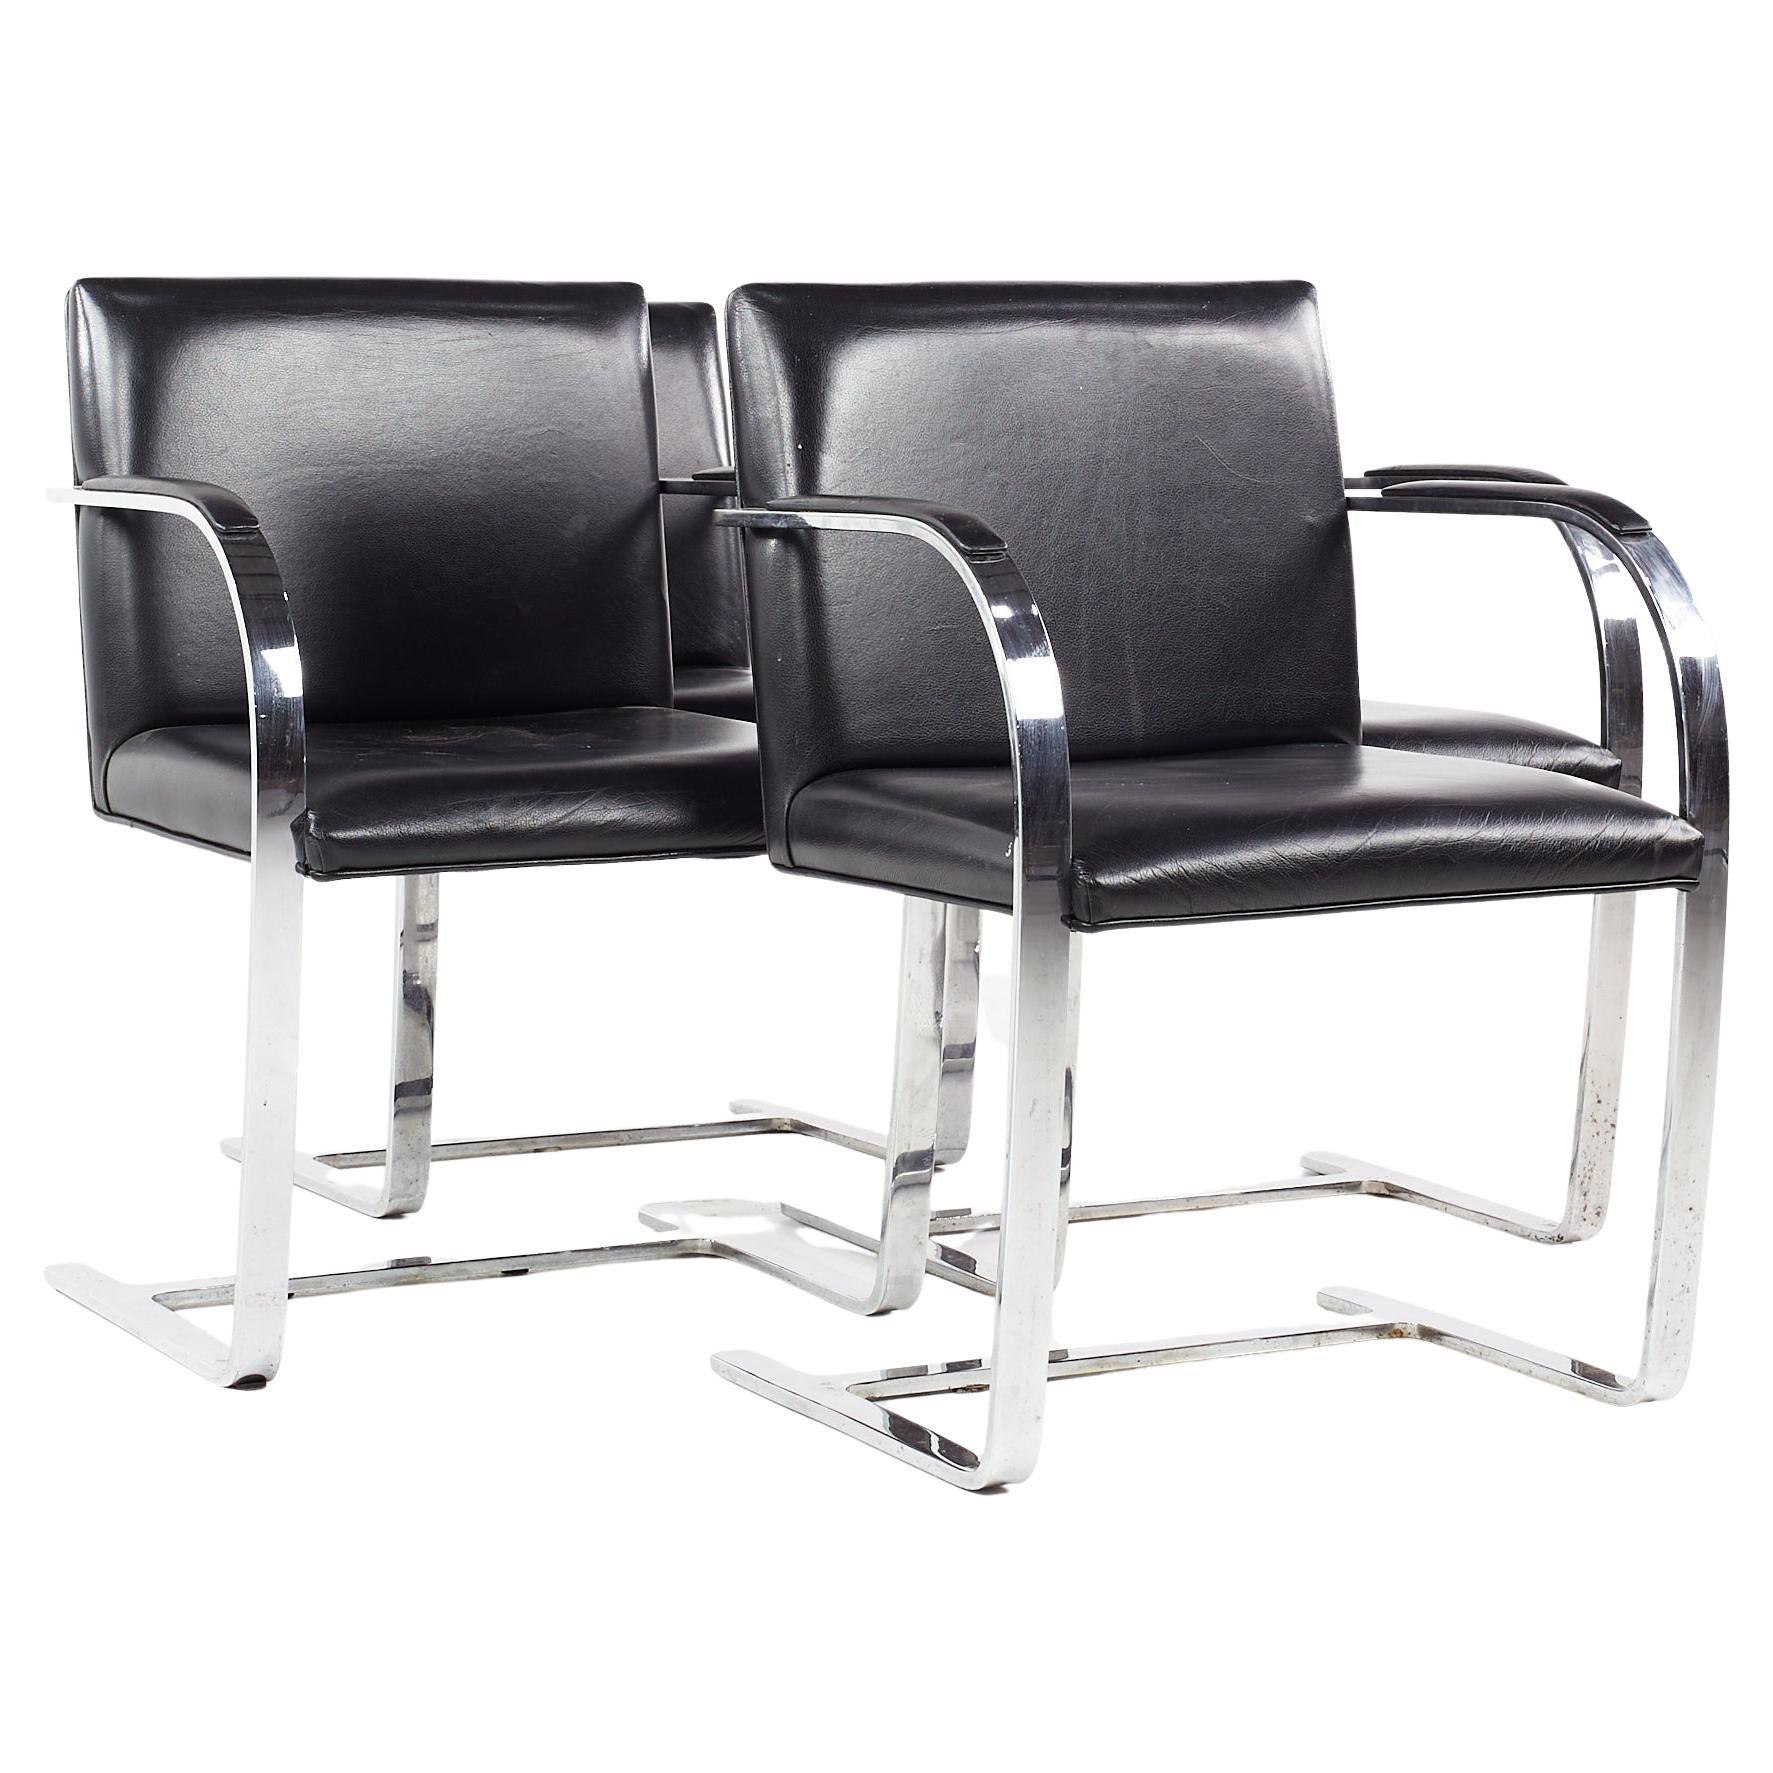 Gordon BRNO Mid-Century Flat Bar Black Leather Chairs, Set of 4